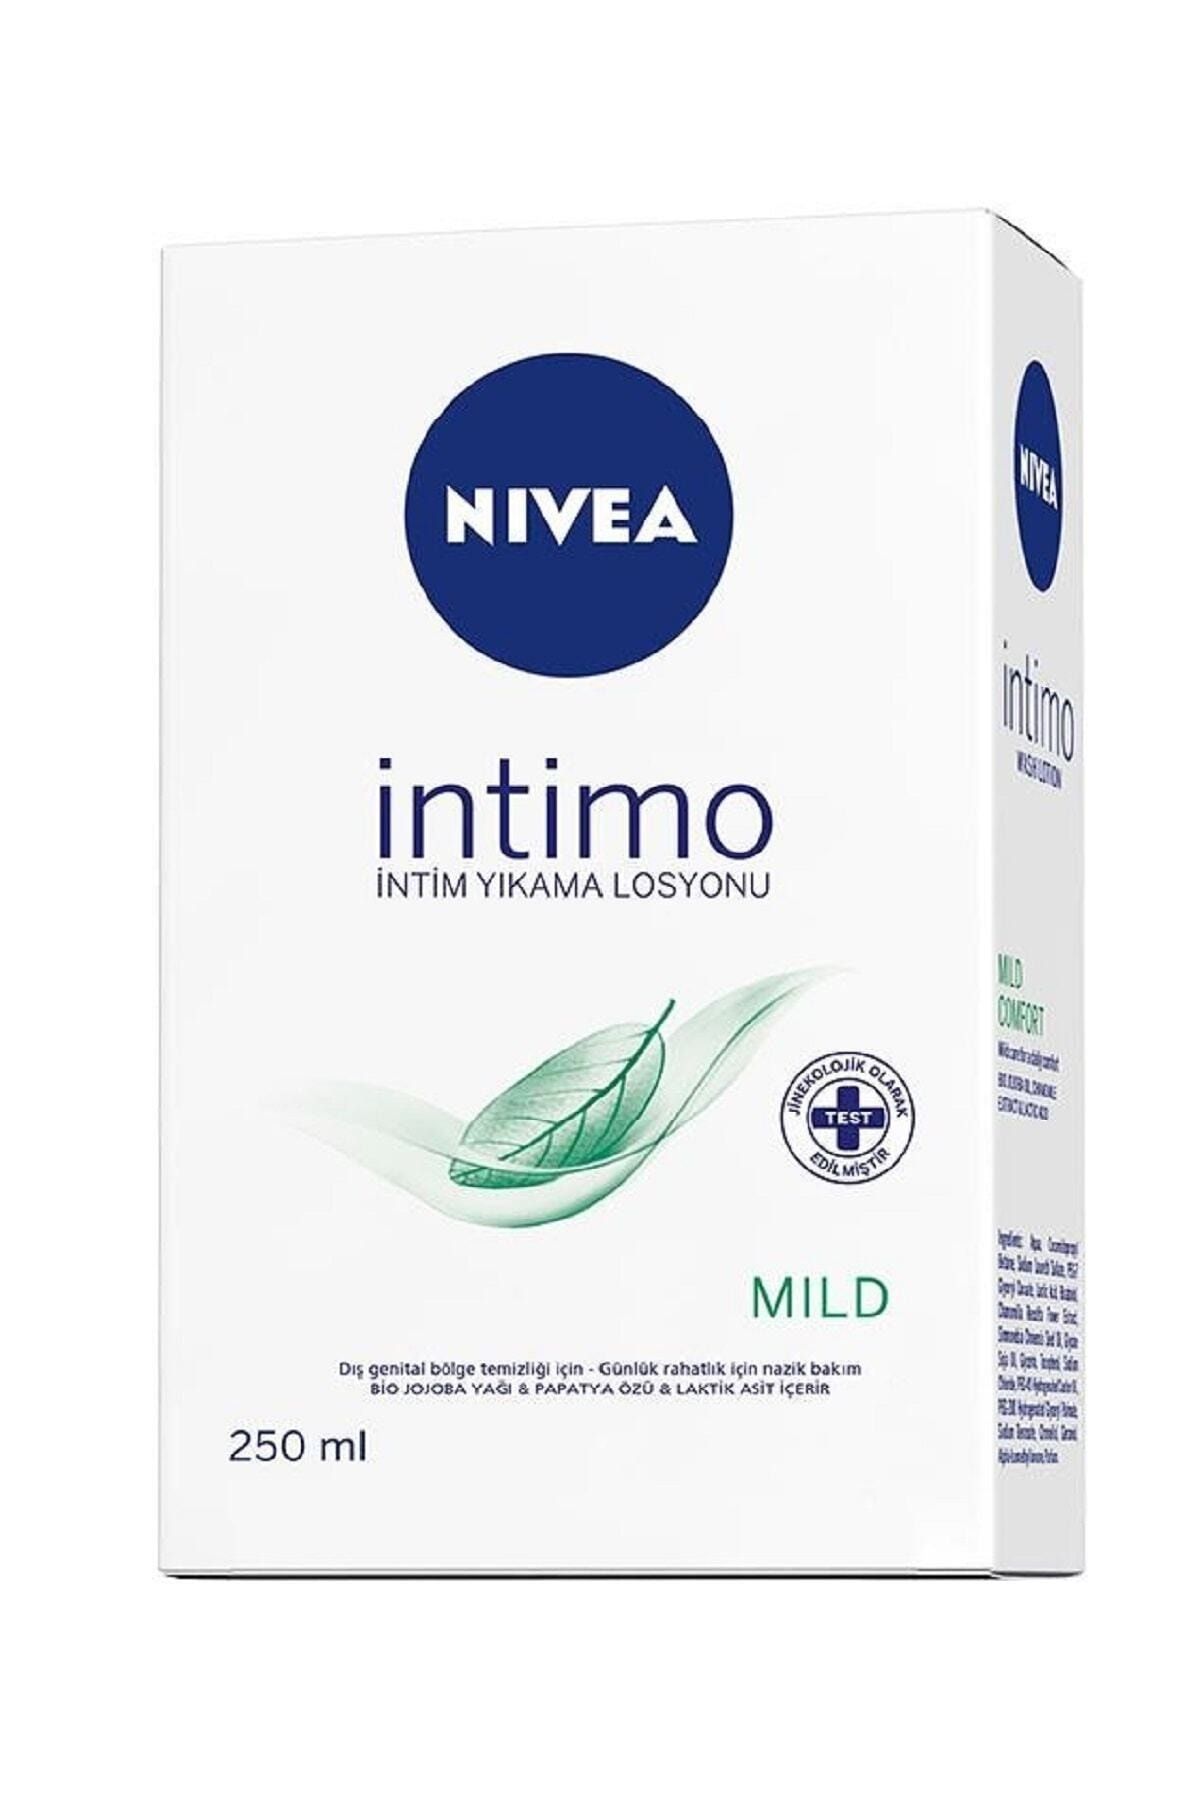 NIVEA Intimo Mild Comfort Intim Yıkama Losyonu 250 ml